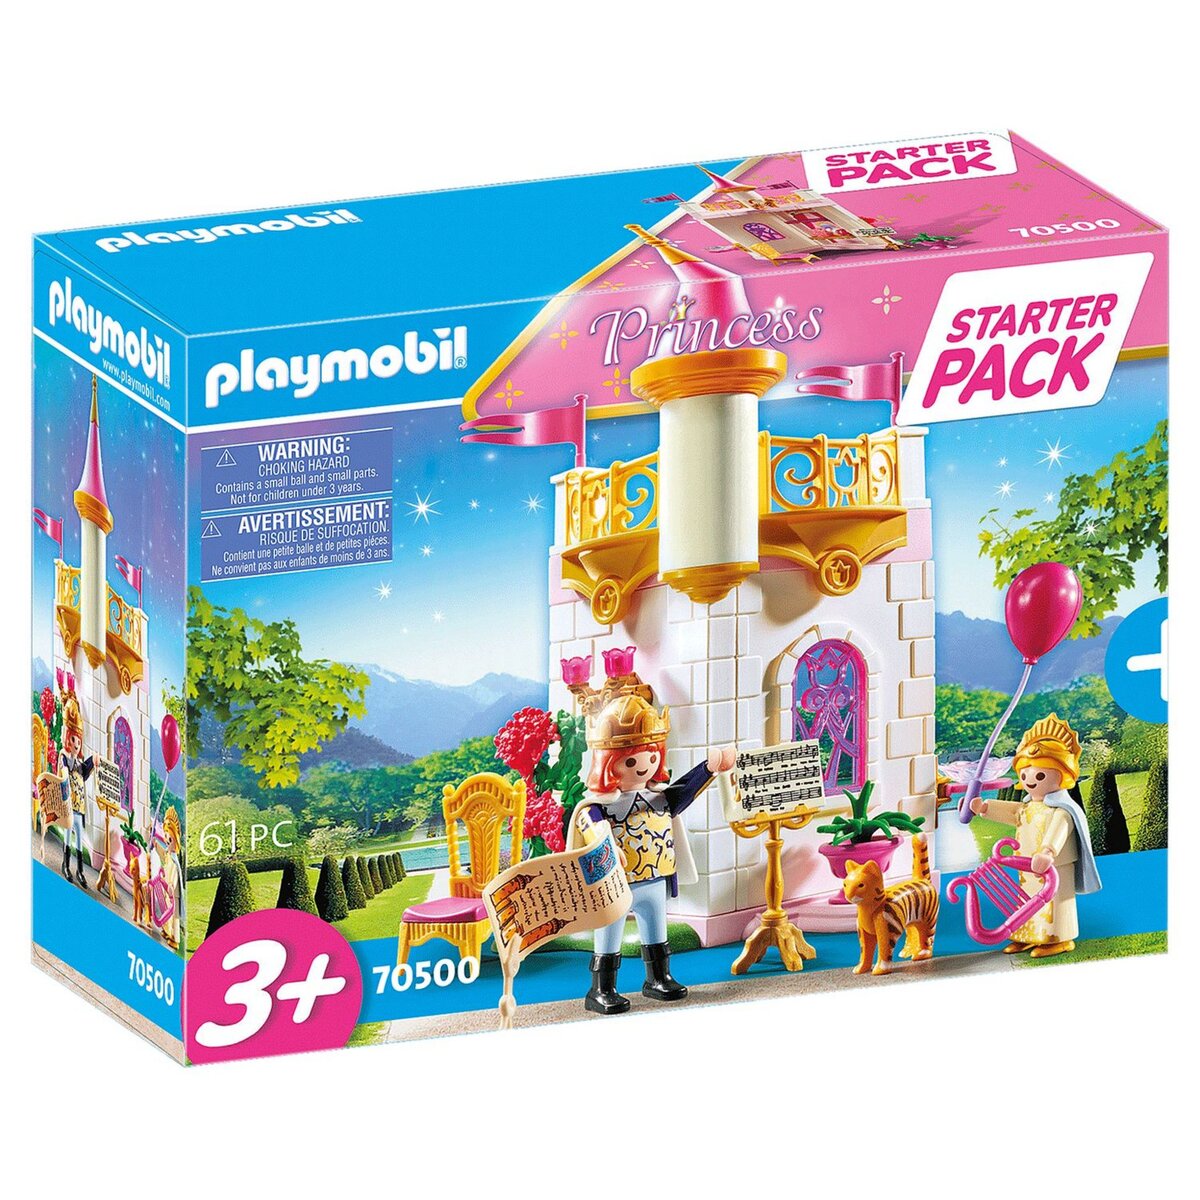 PLAYMOBIL 70500 - Princess - Starter Pack Tourelle royale